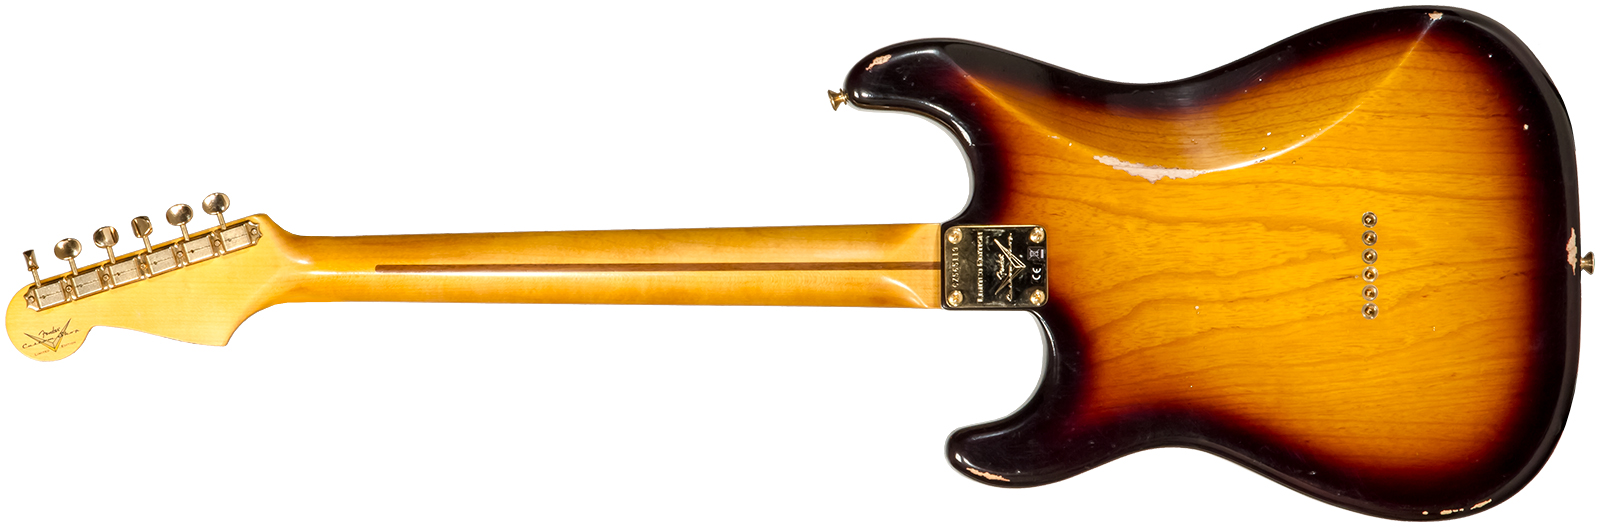 Fender Custom Shop Strat 1956 Hardtail Gold Hardware 3s Ht Mn #cz565119 - Relic Faded 2-color Sunburst - Guitarra eléctrica con forma de str. - Variat